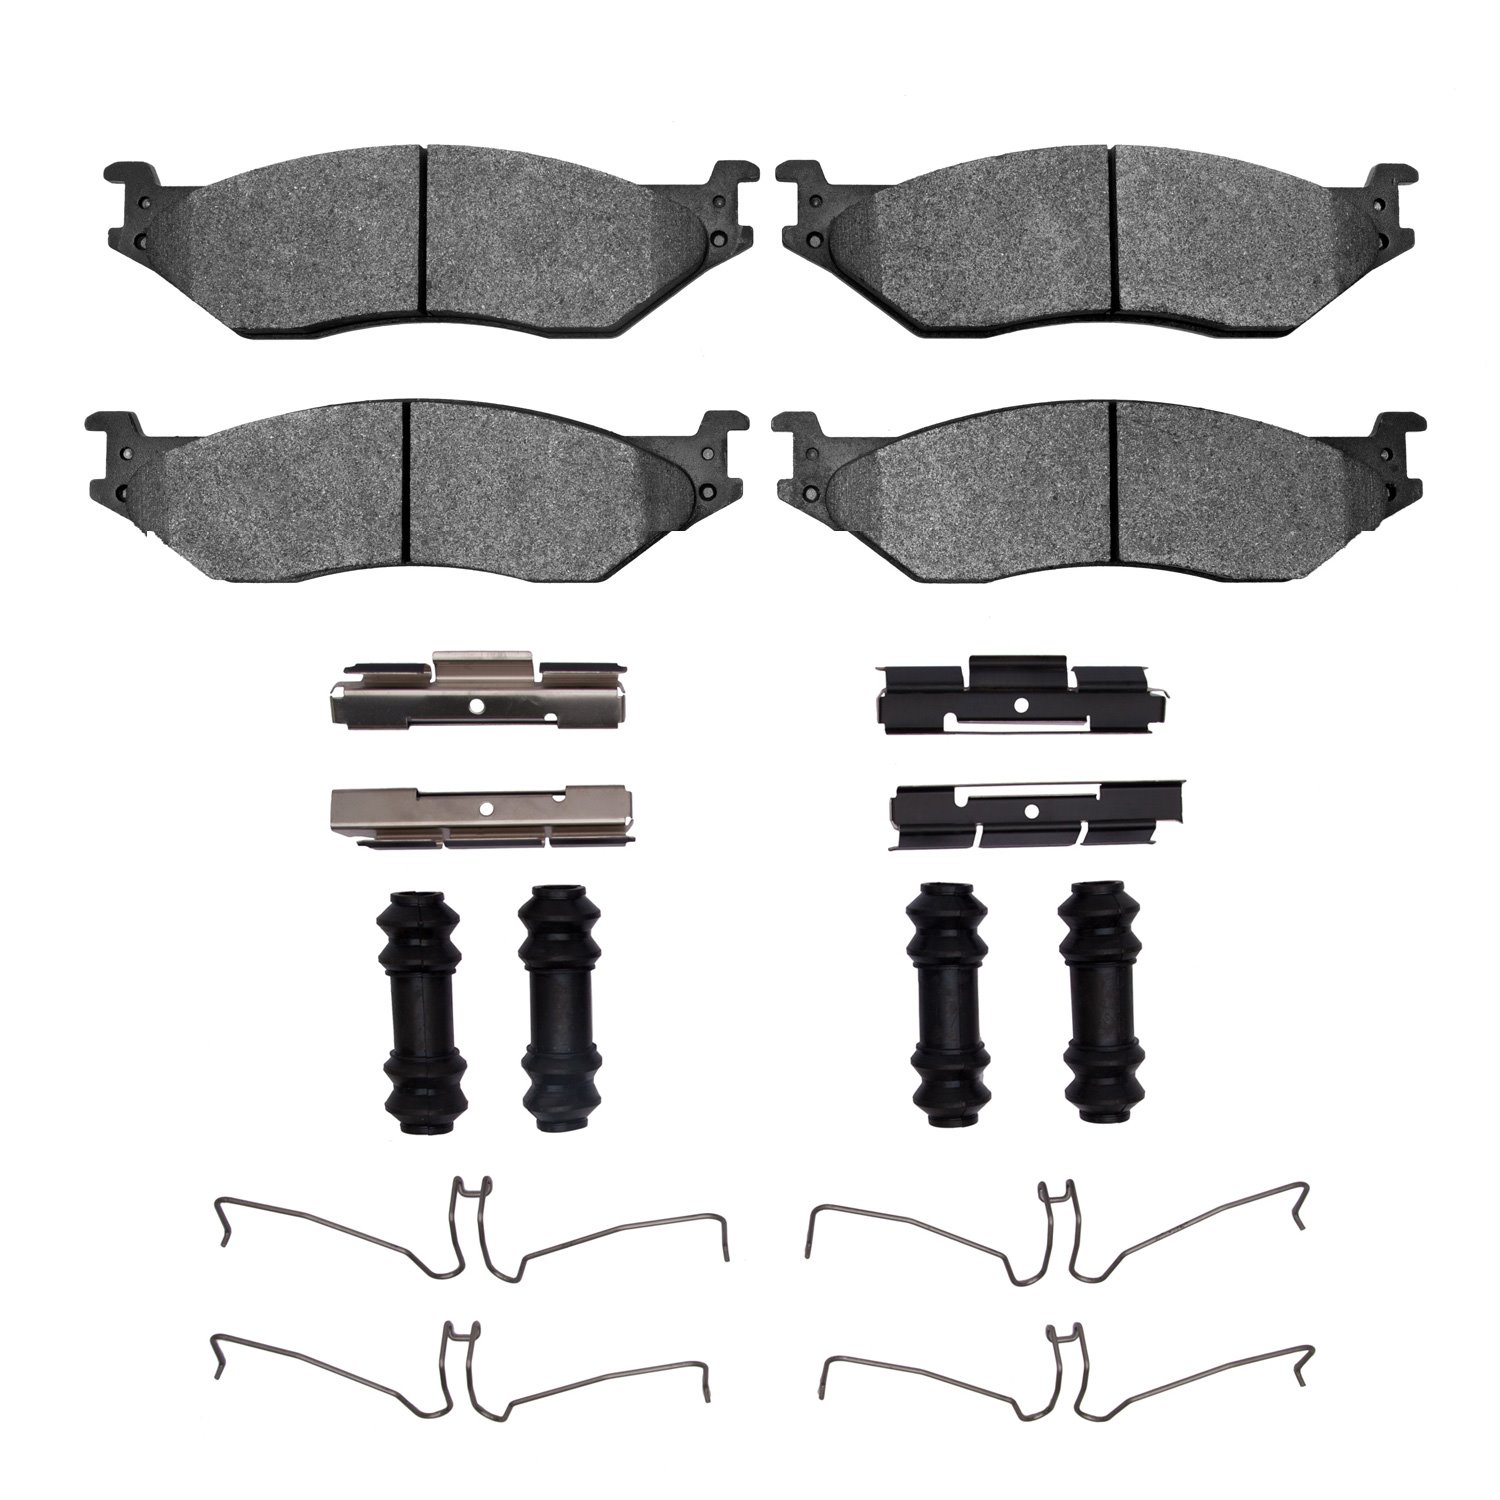 1311-1066-01 3000-Series Semi-Metallic Brake Pads & Hardware Kit, Fits Select Multiple Makes/Models, Position: Rr,Fr & Rr,Front,